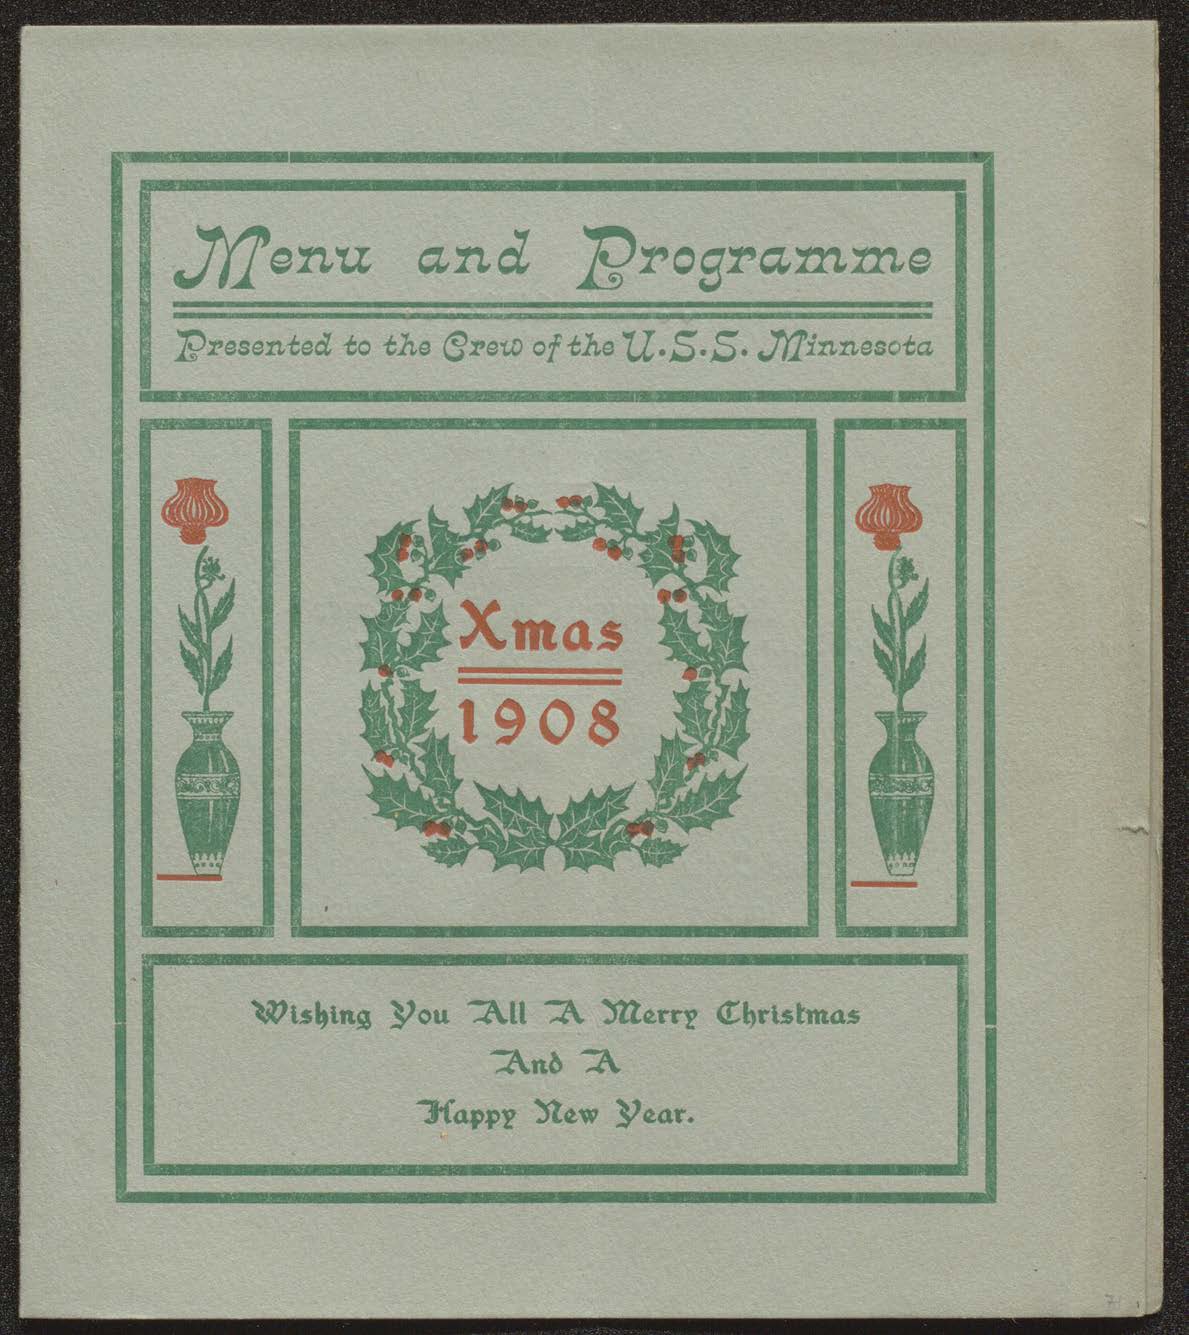 Christmas menu and program, U.S.S. Minnesota